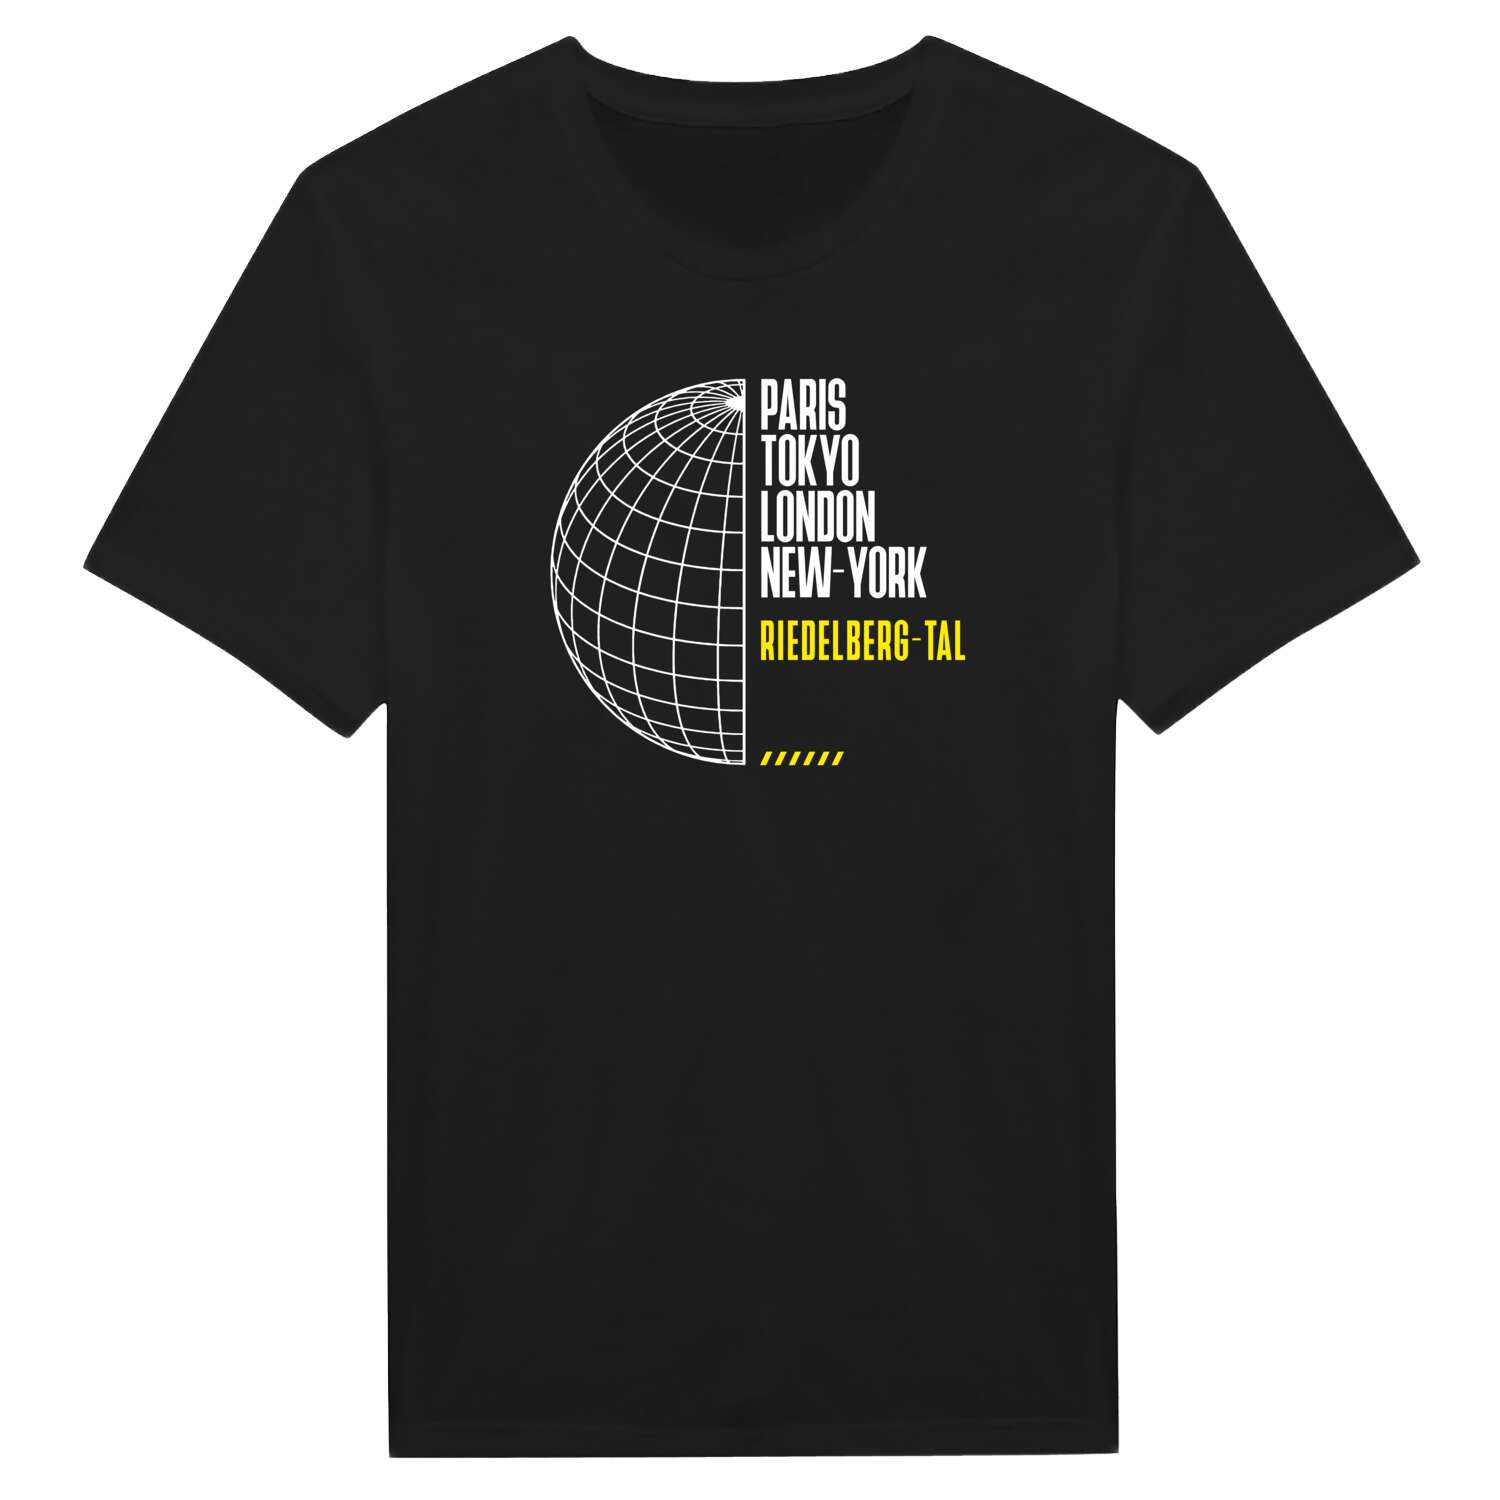 Riedelberg-Tal T-Shirt »Paris Tokyo London«